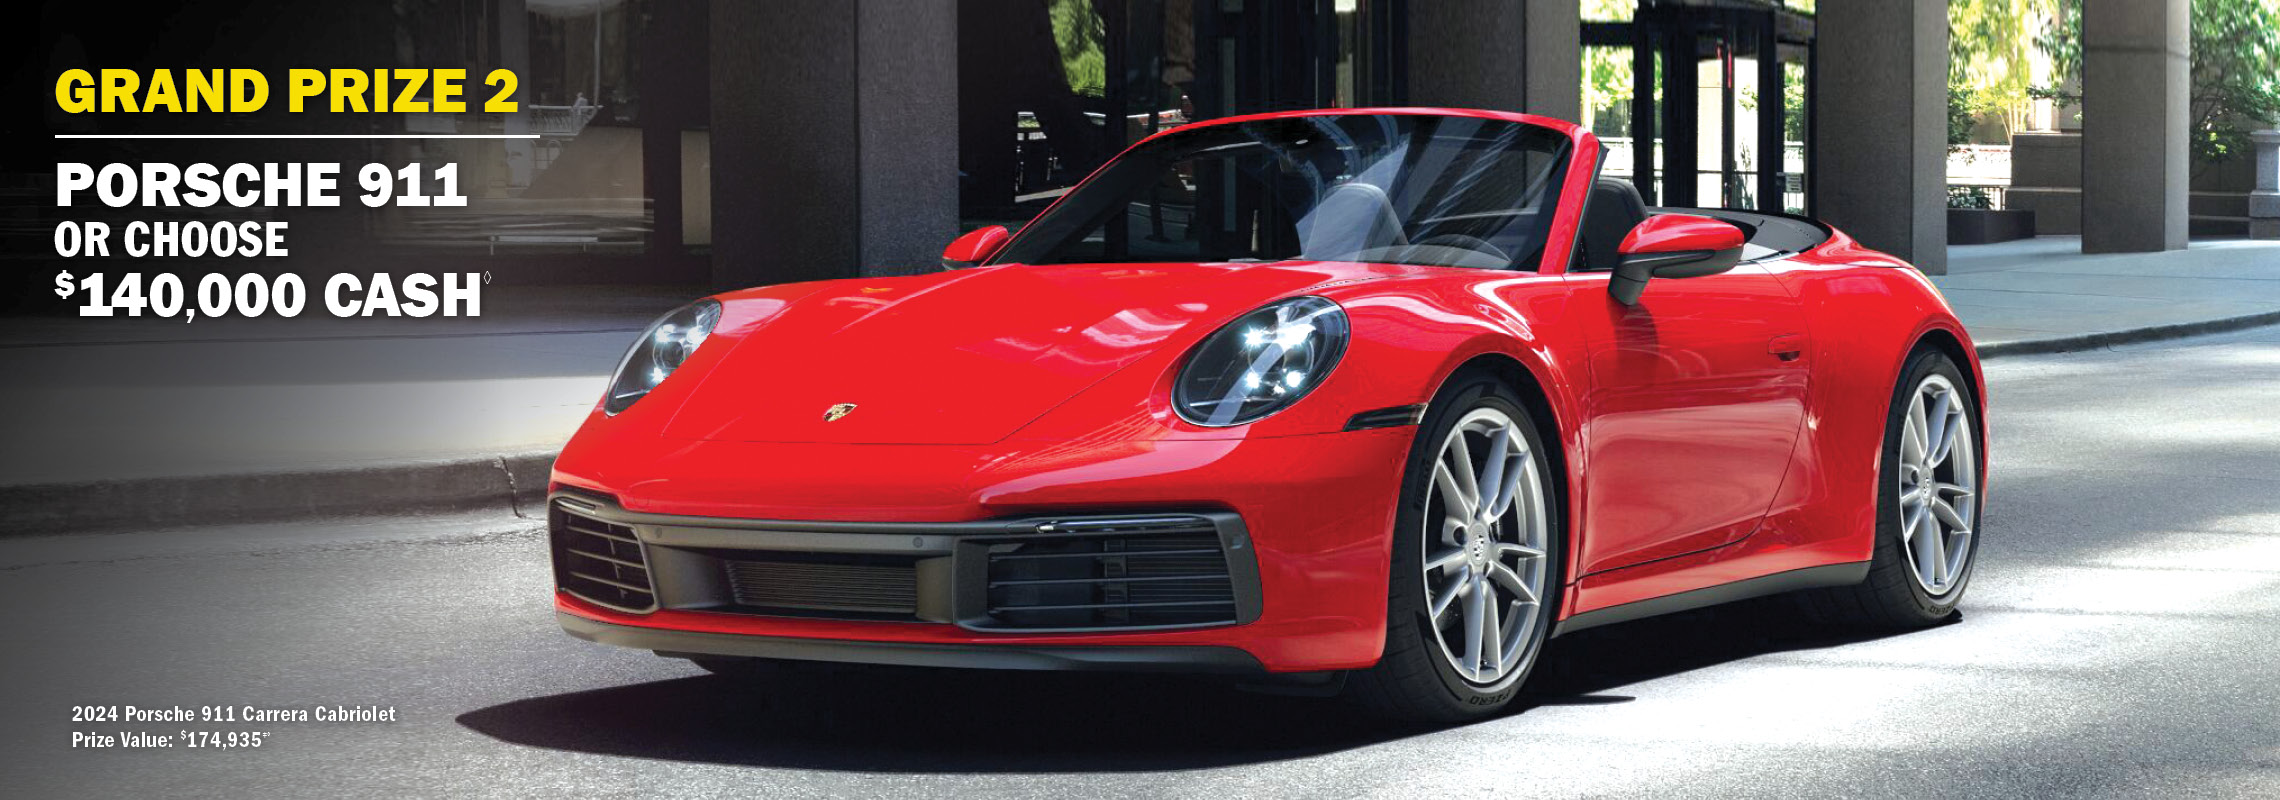 GRAND PRIZE 2 - Porsche 911 or choose $140,000 cash.